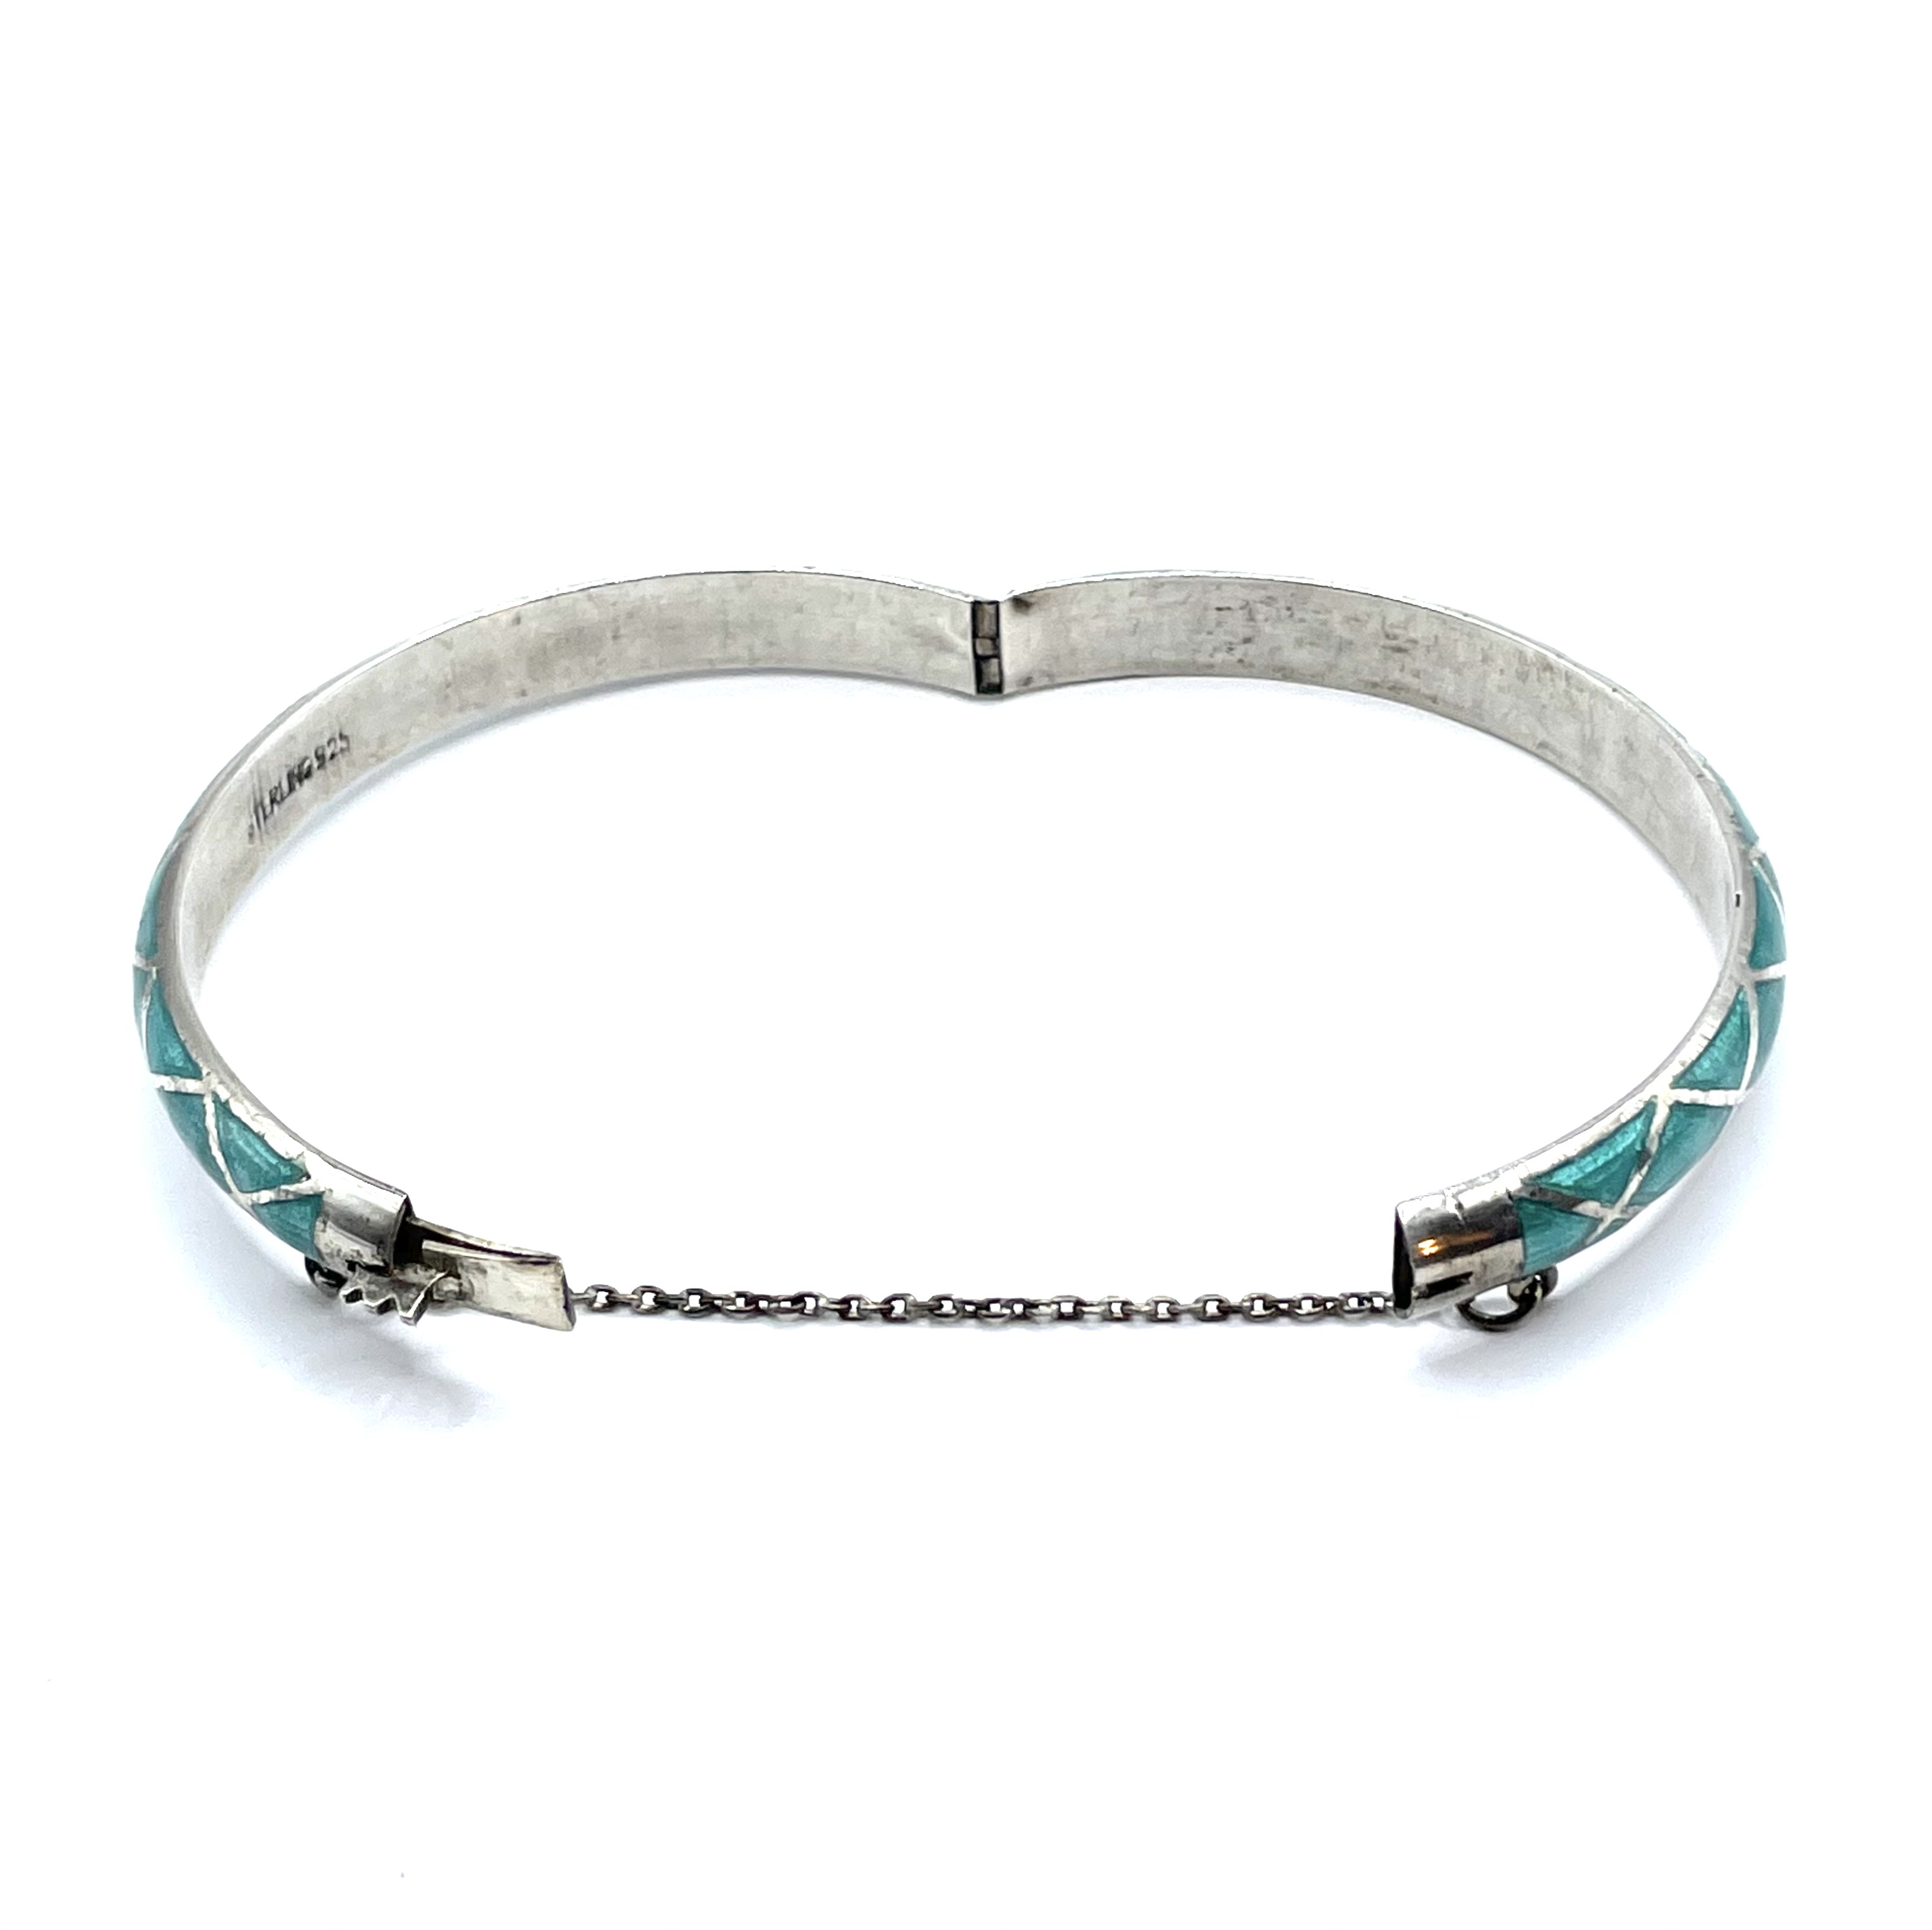 Turquoise sterling silver bangle bracelet